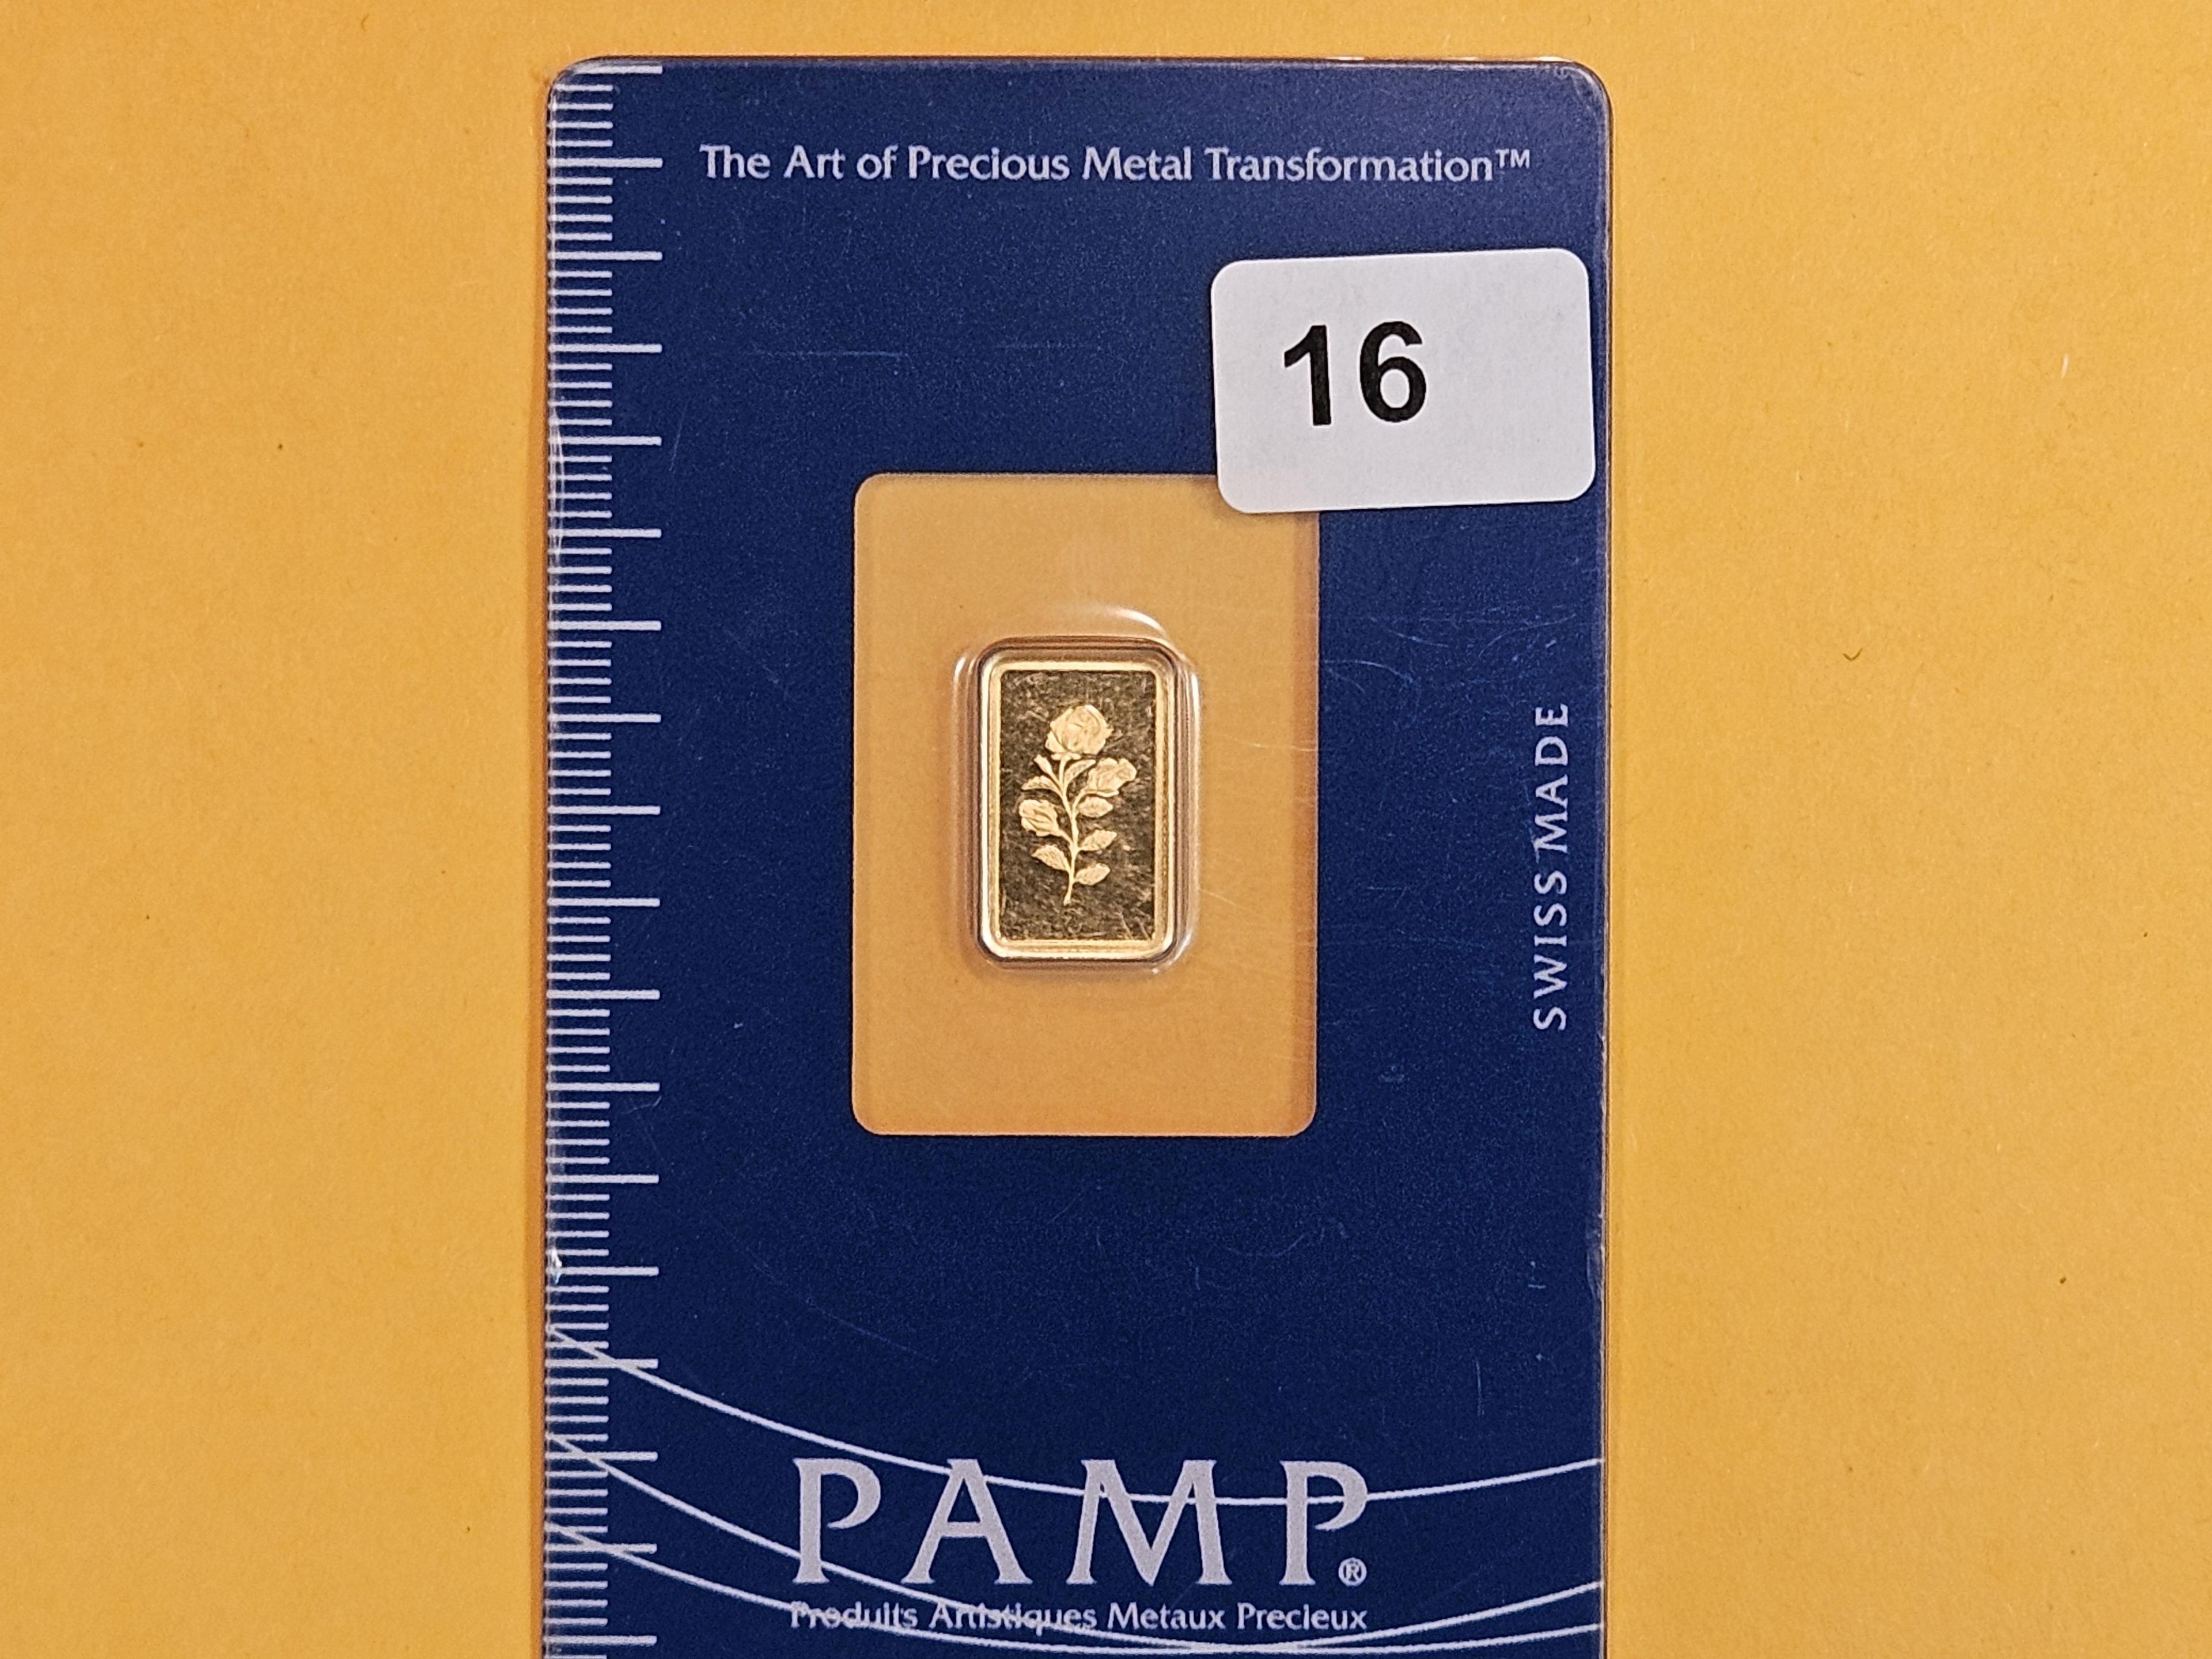 GOLD! PAMP Suisse one gramm .9999 fine gold bar